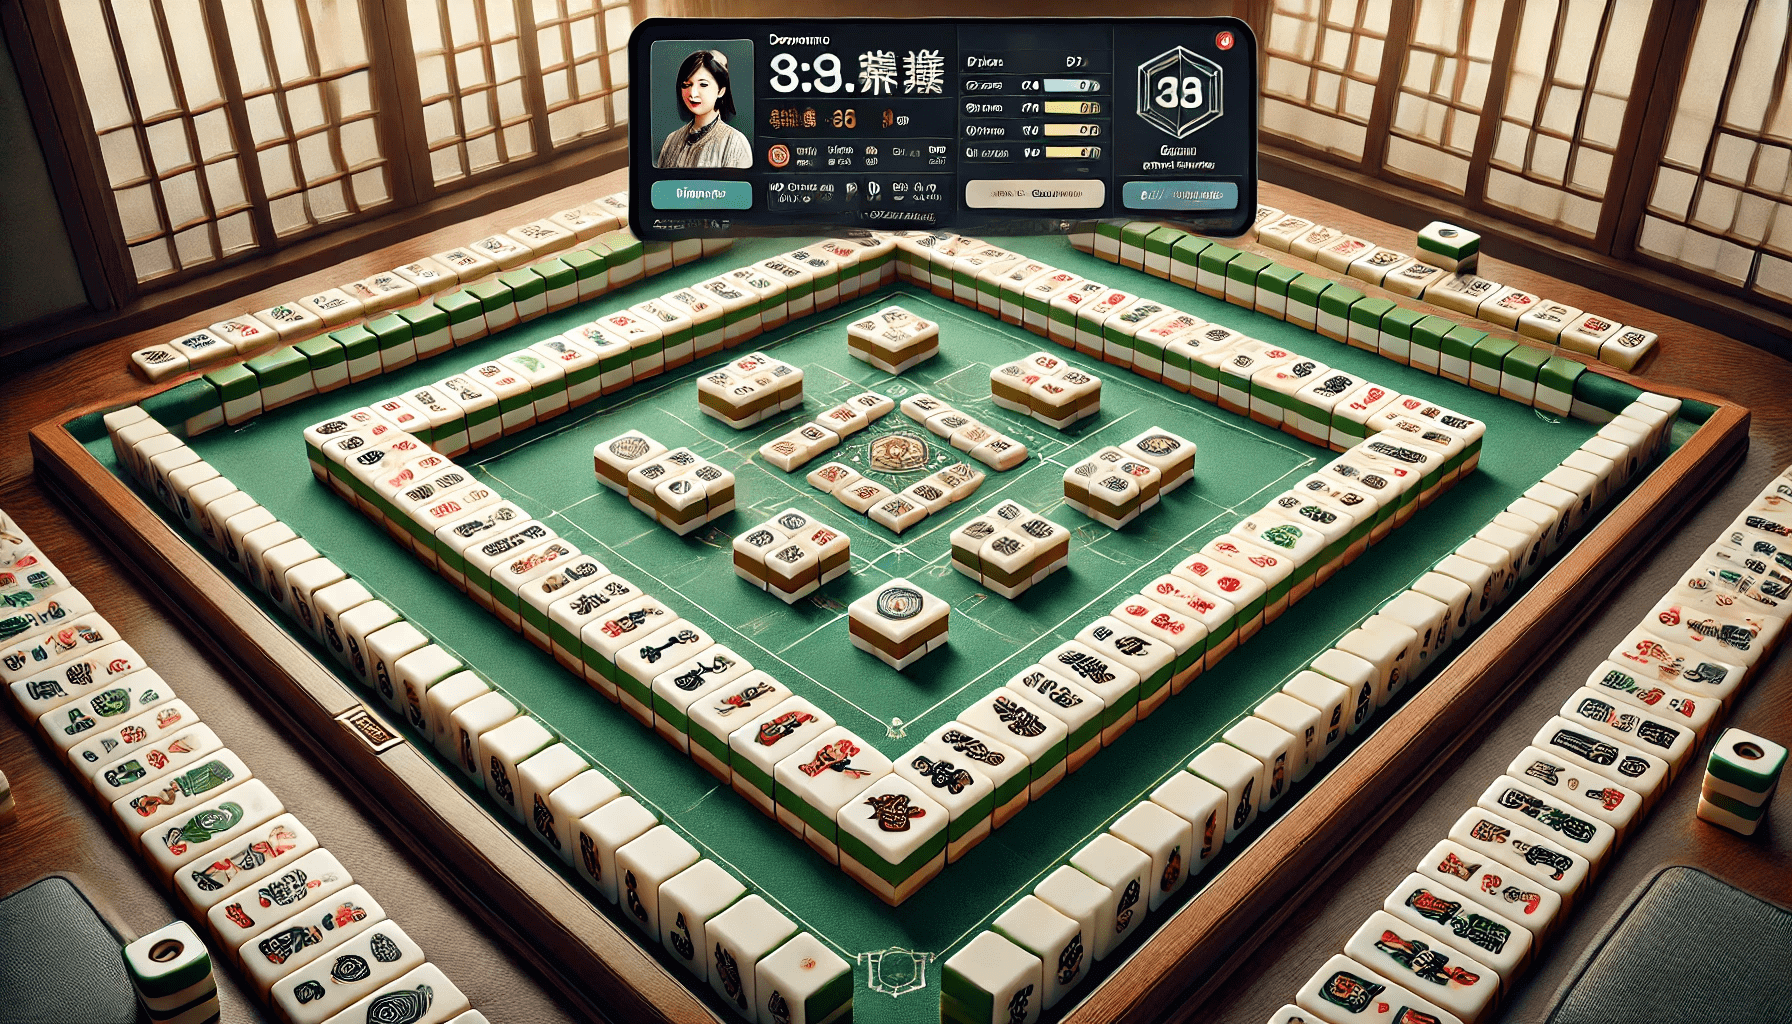 Play Singapore mahjong online